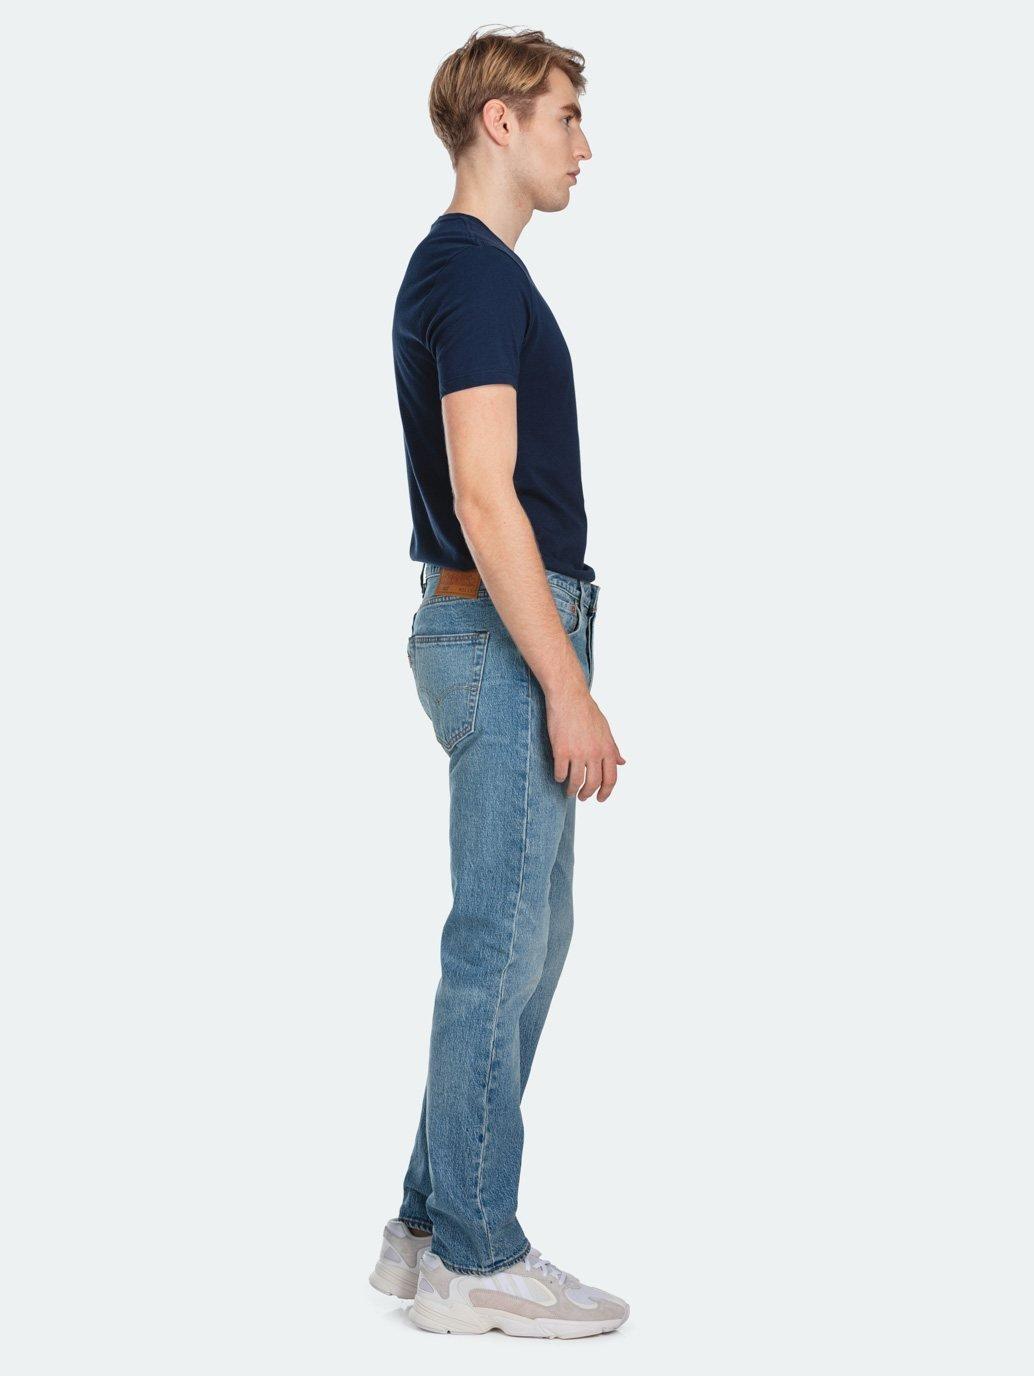 levis malaysia 501 original fit jeans for men basil crane side view